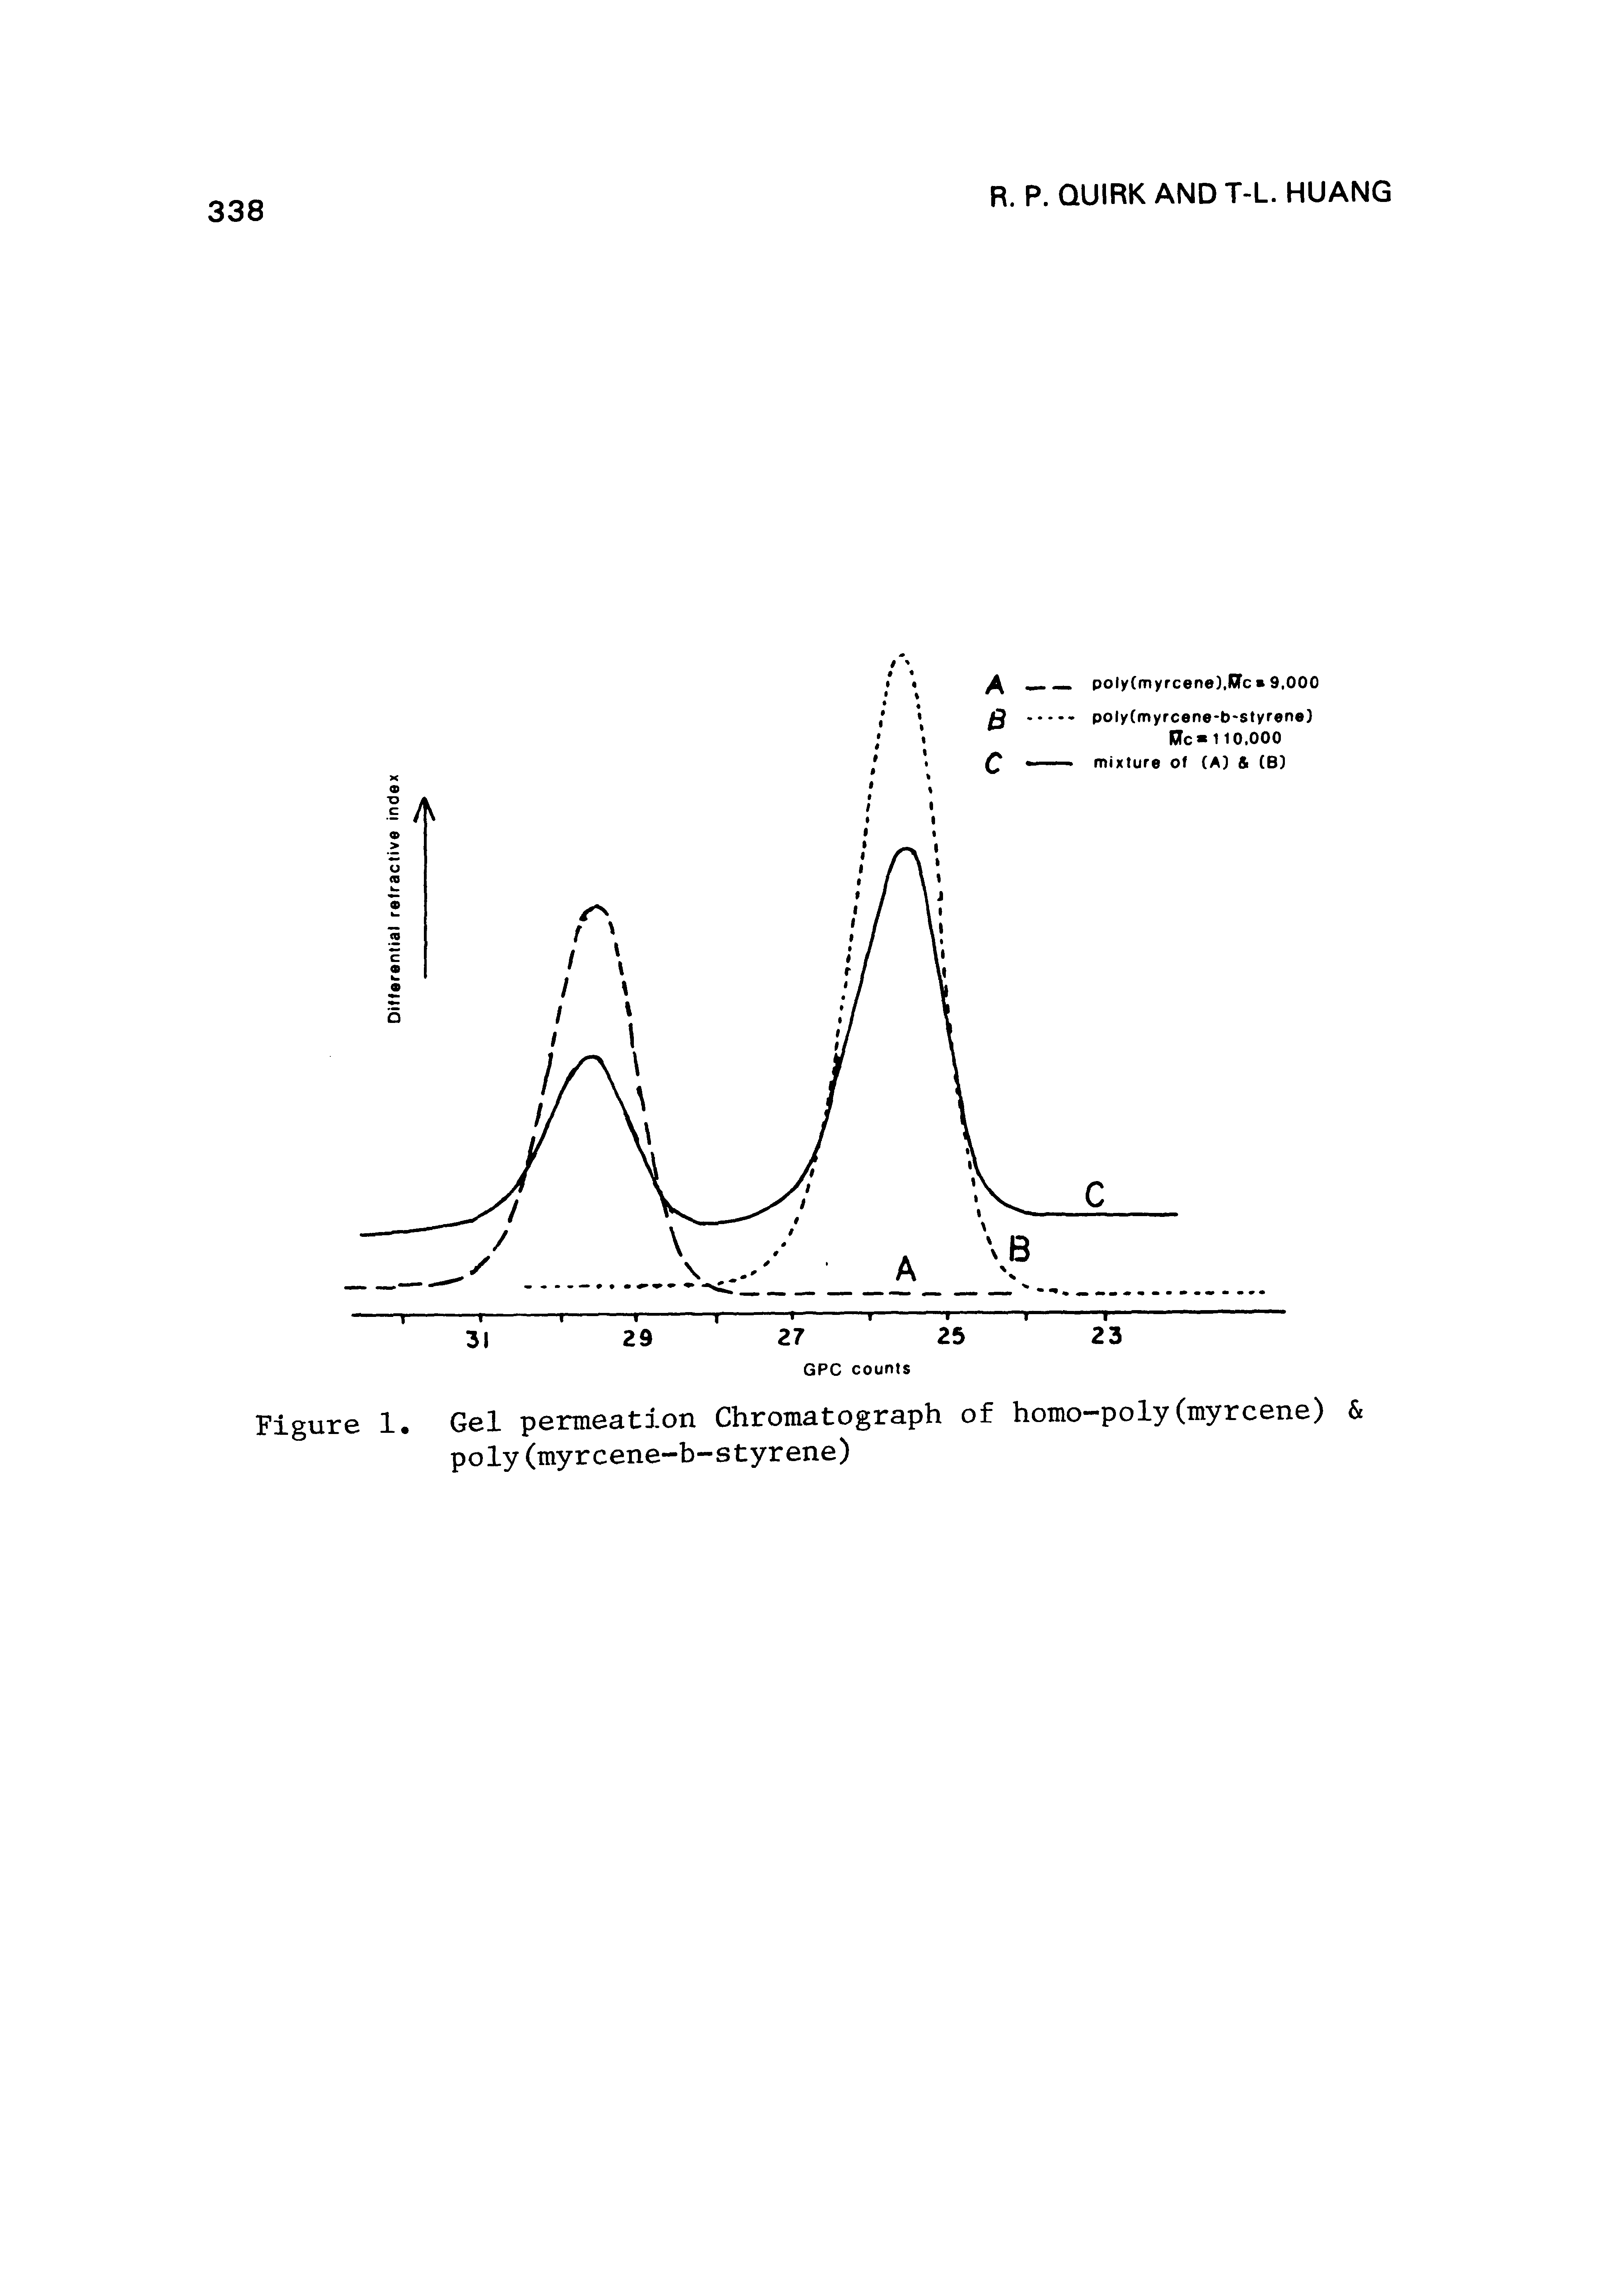 Figure 1. Gel permeation Chromatograph of homo-poly(myrcene) poly(myrcene-b-styrene)...